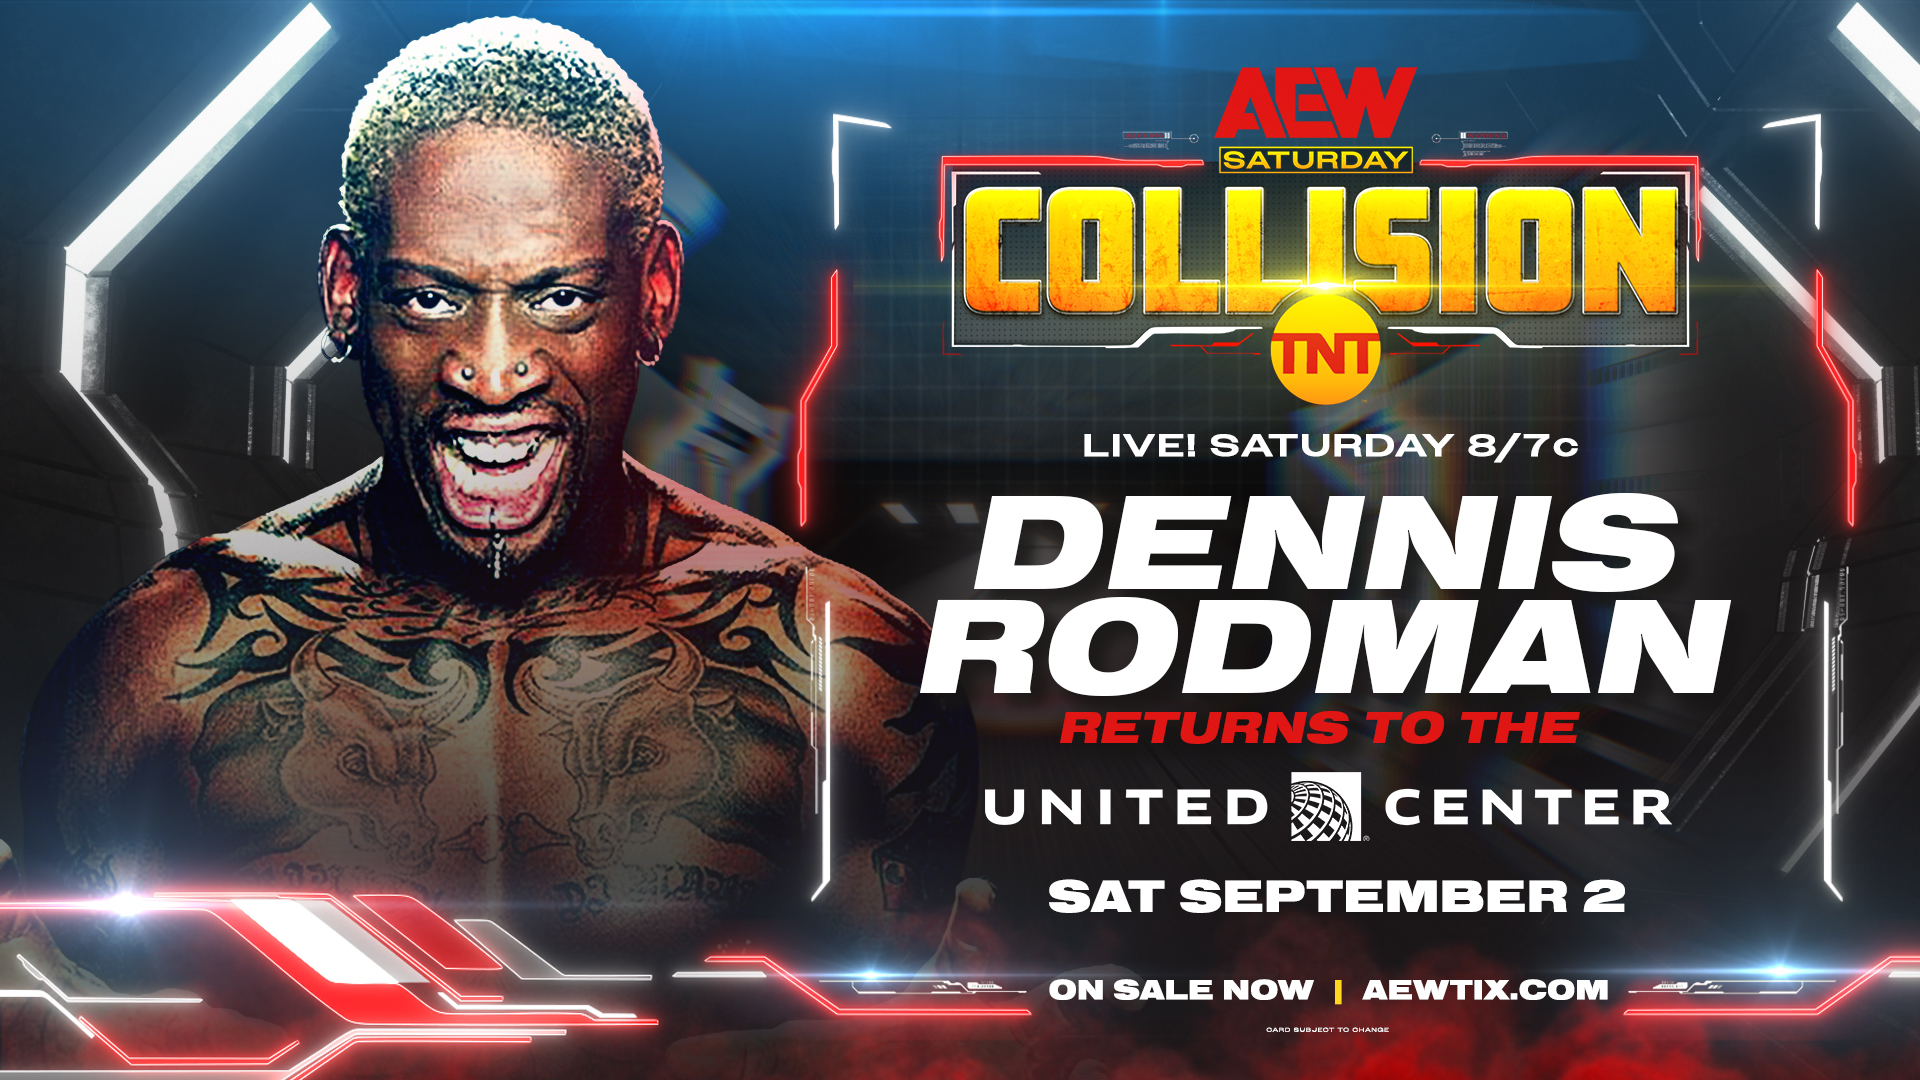 Dennis Rodman to appear on AEW Collision